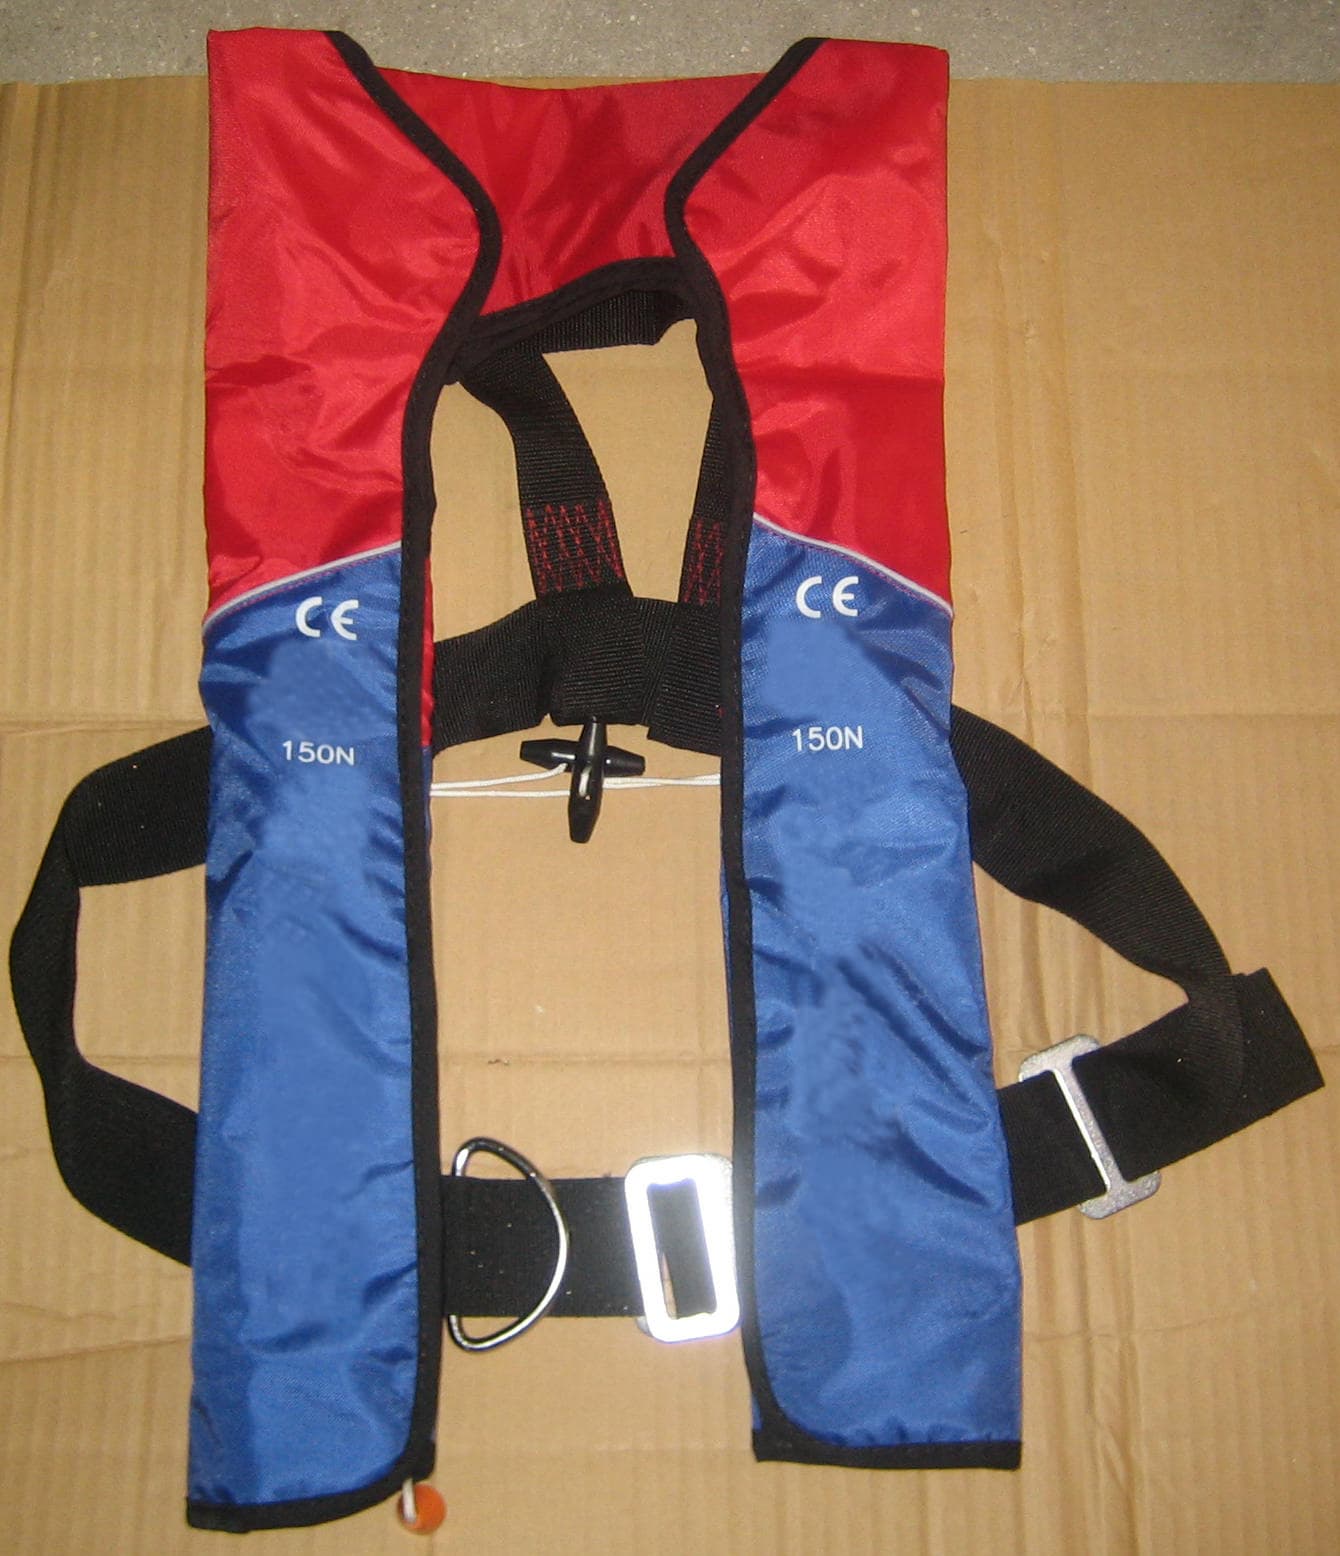 EN Standard Inflatable Co2 Life Jacket